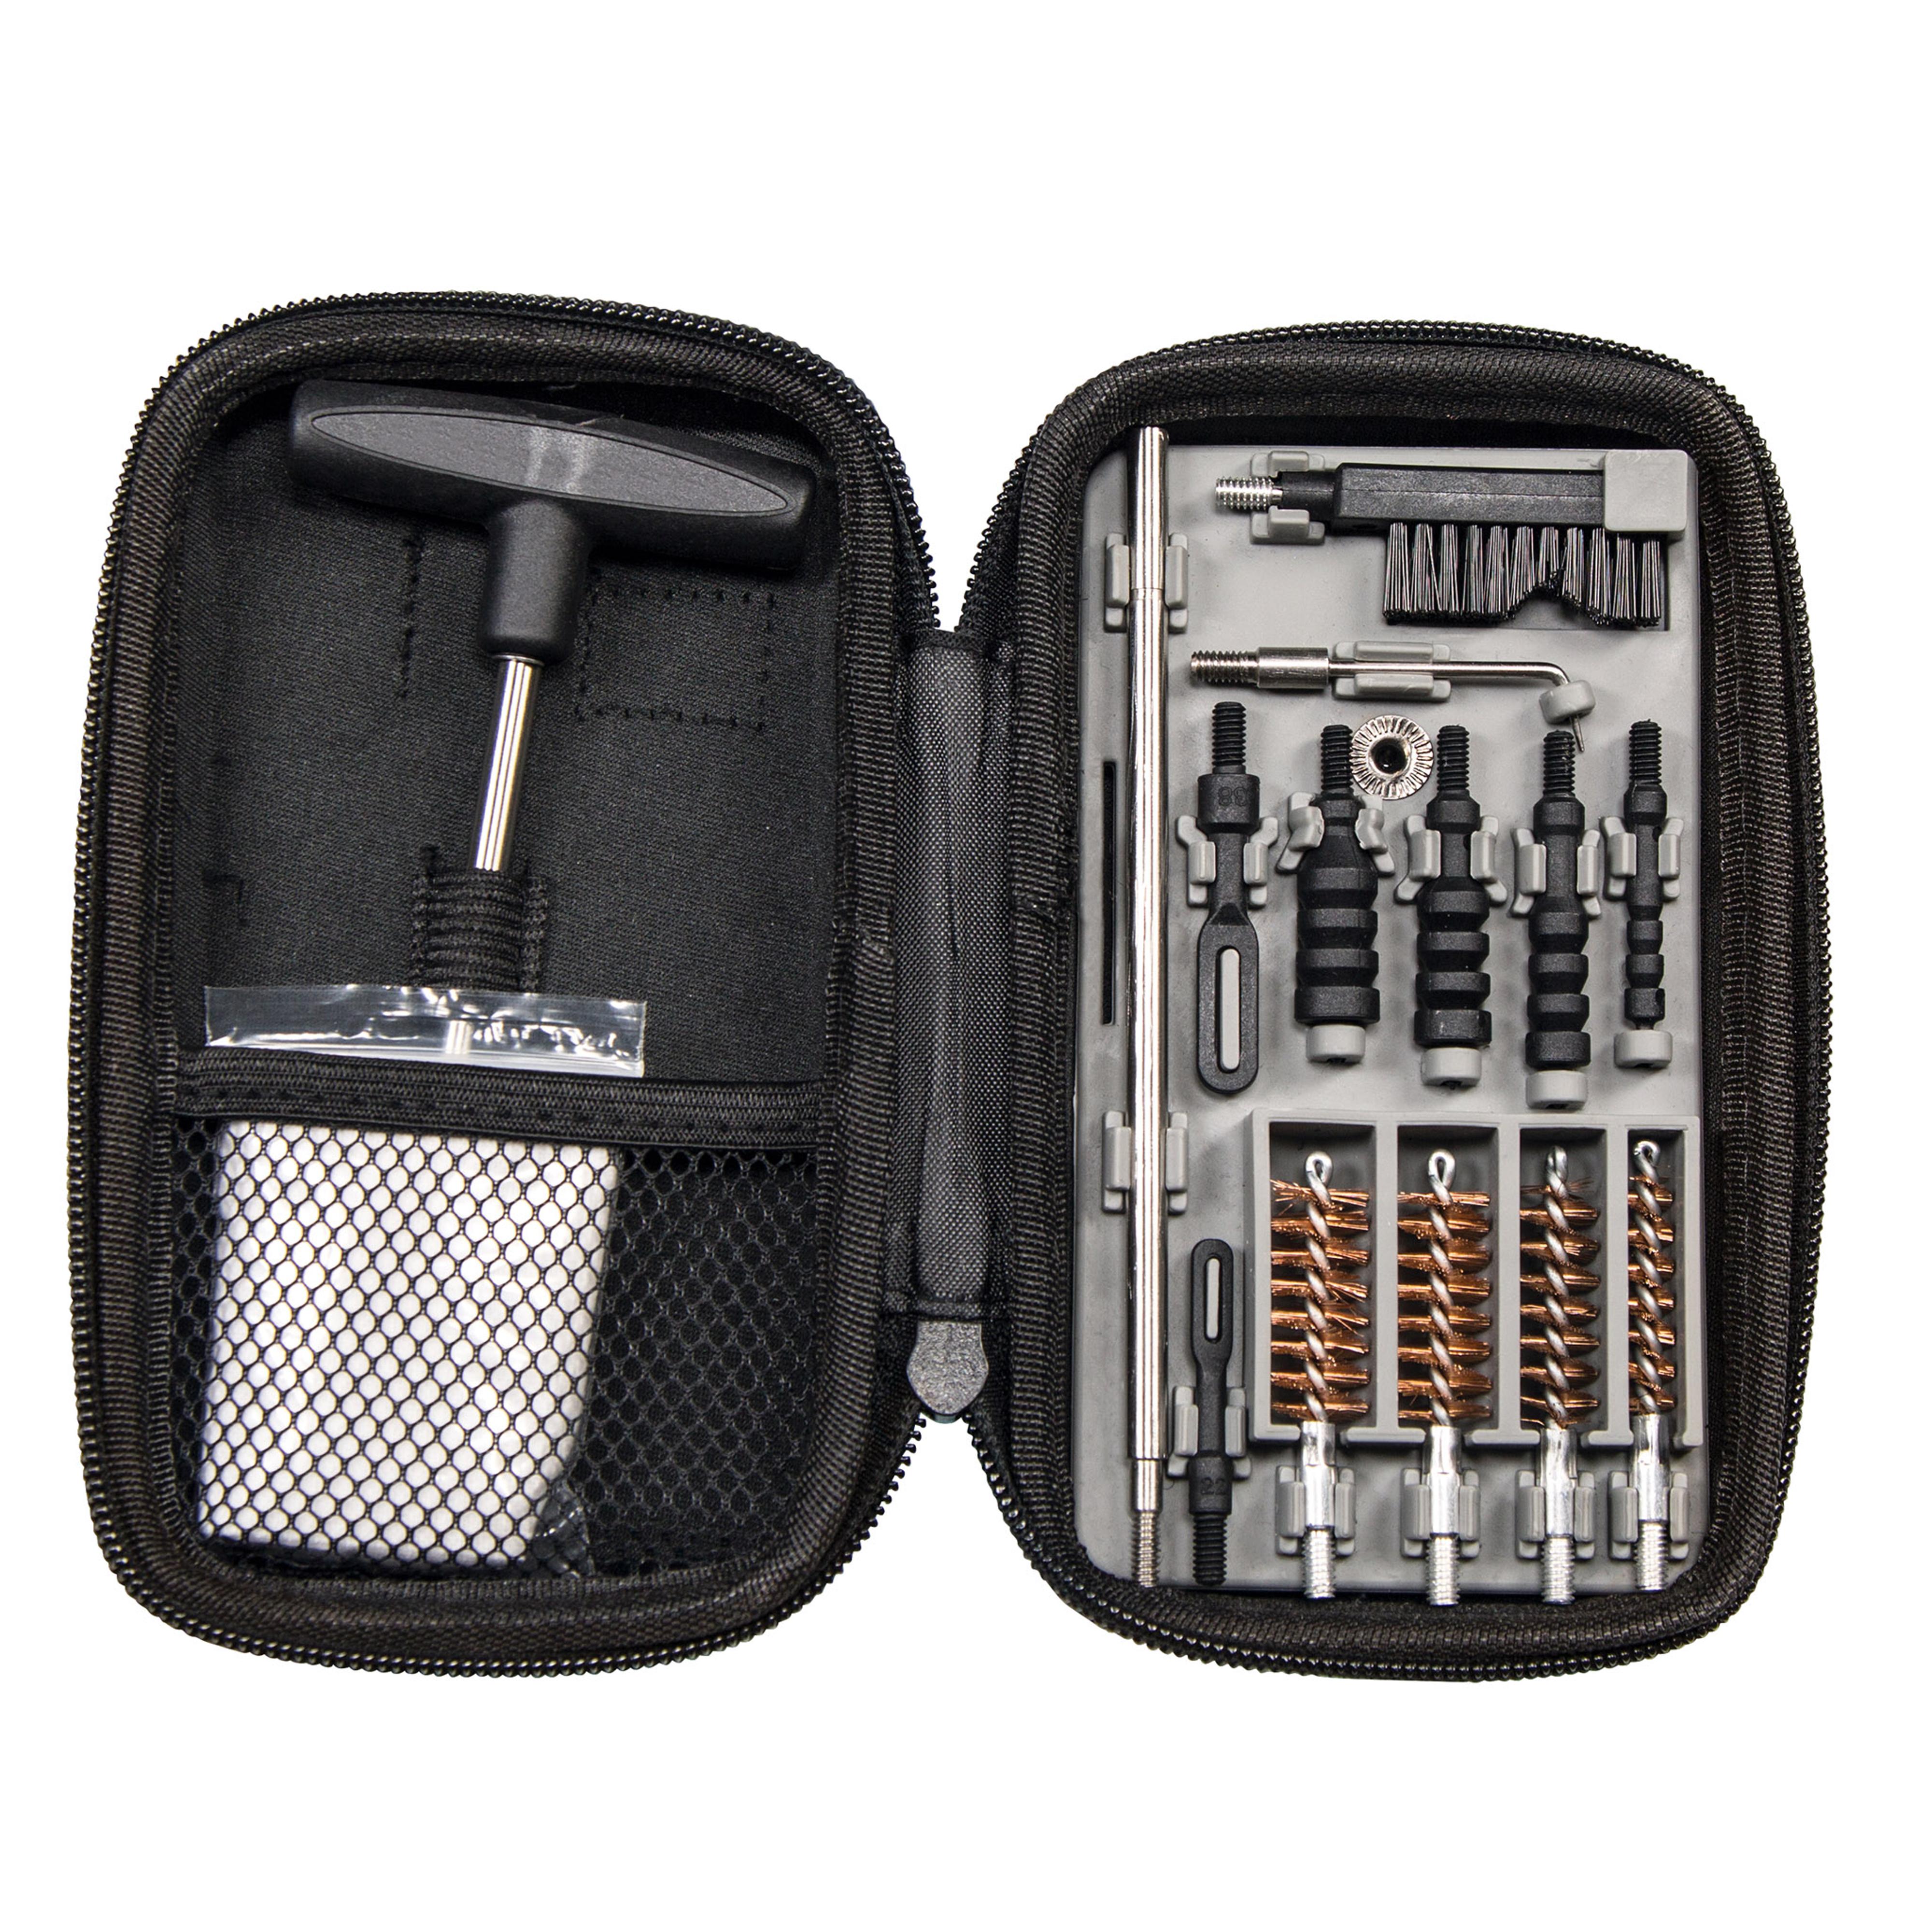 Minitube Pistol Caliber Cleaning System Kit